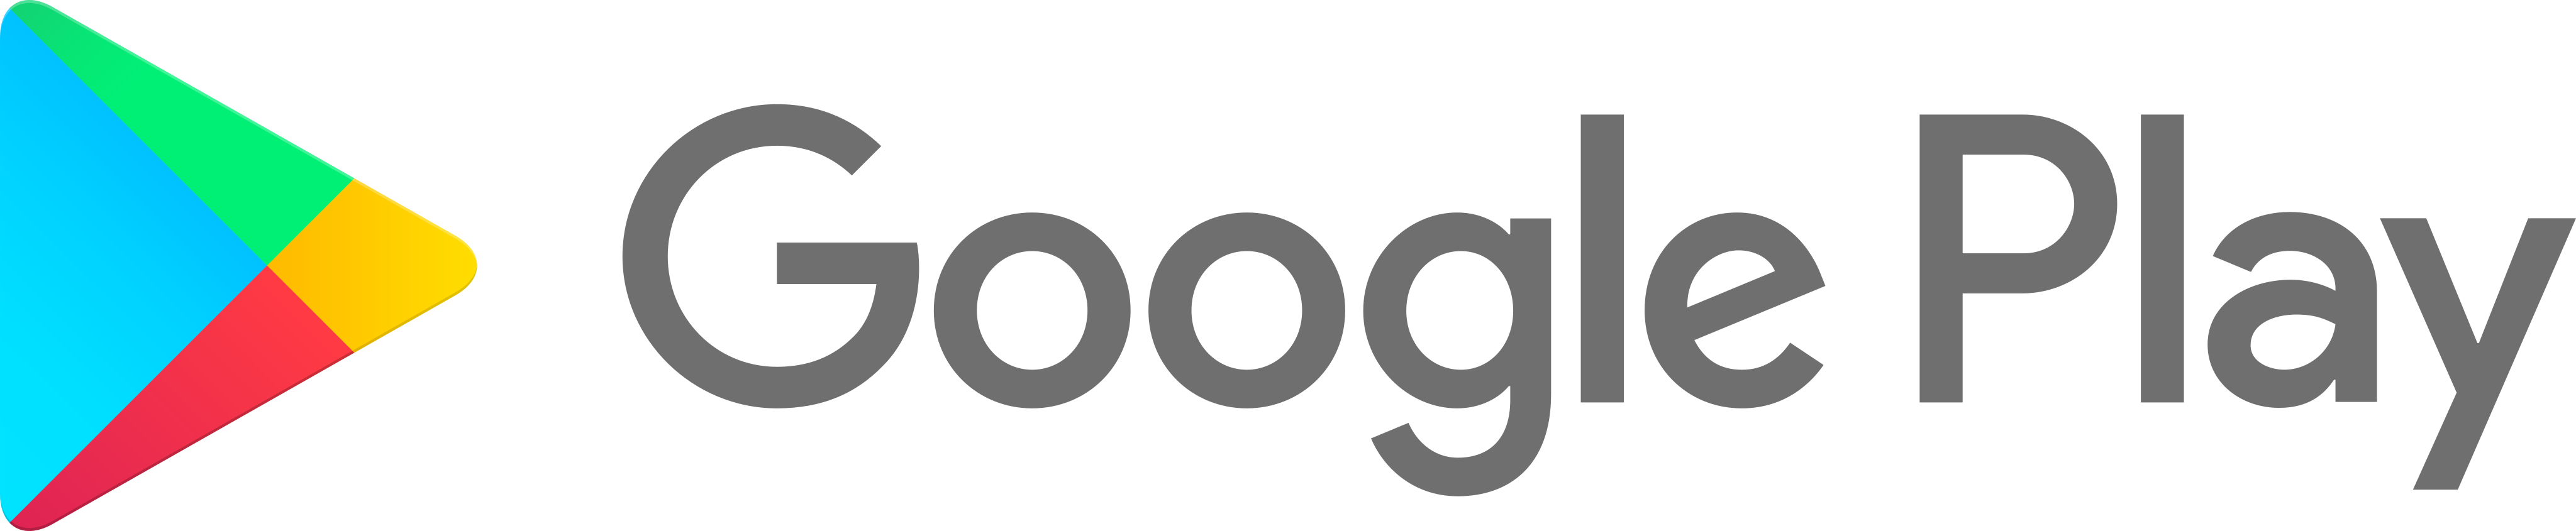 Google Play Logo PNG - 175586